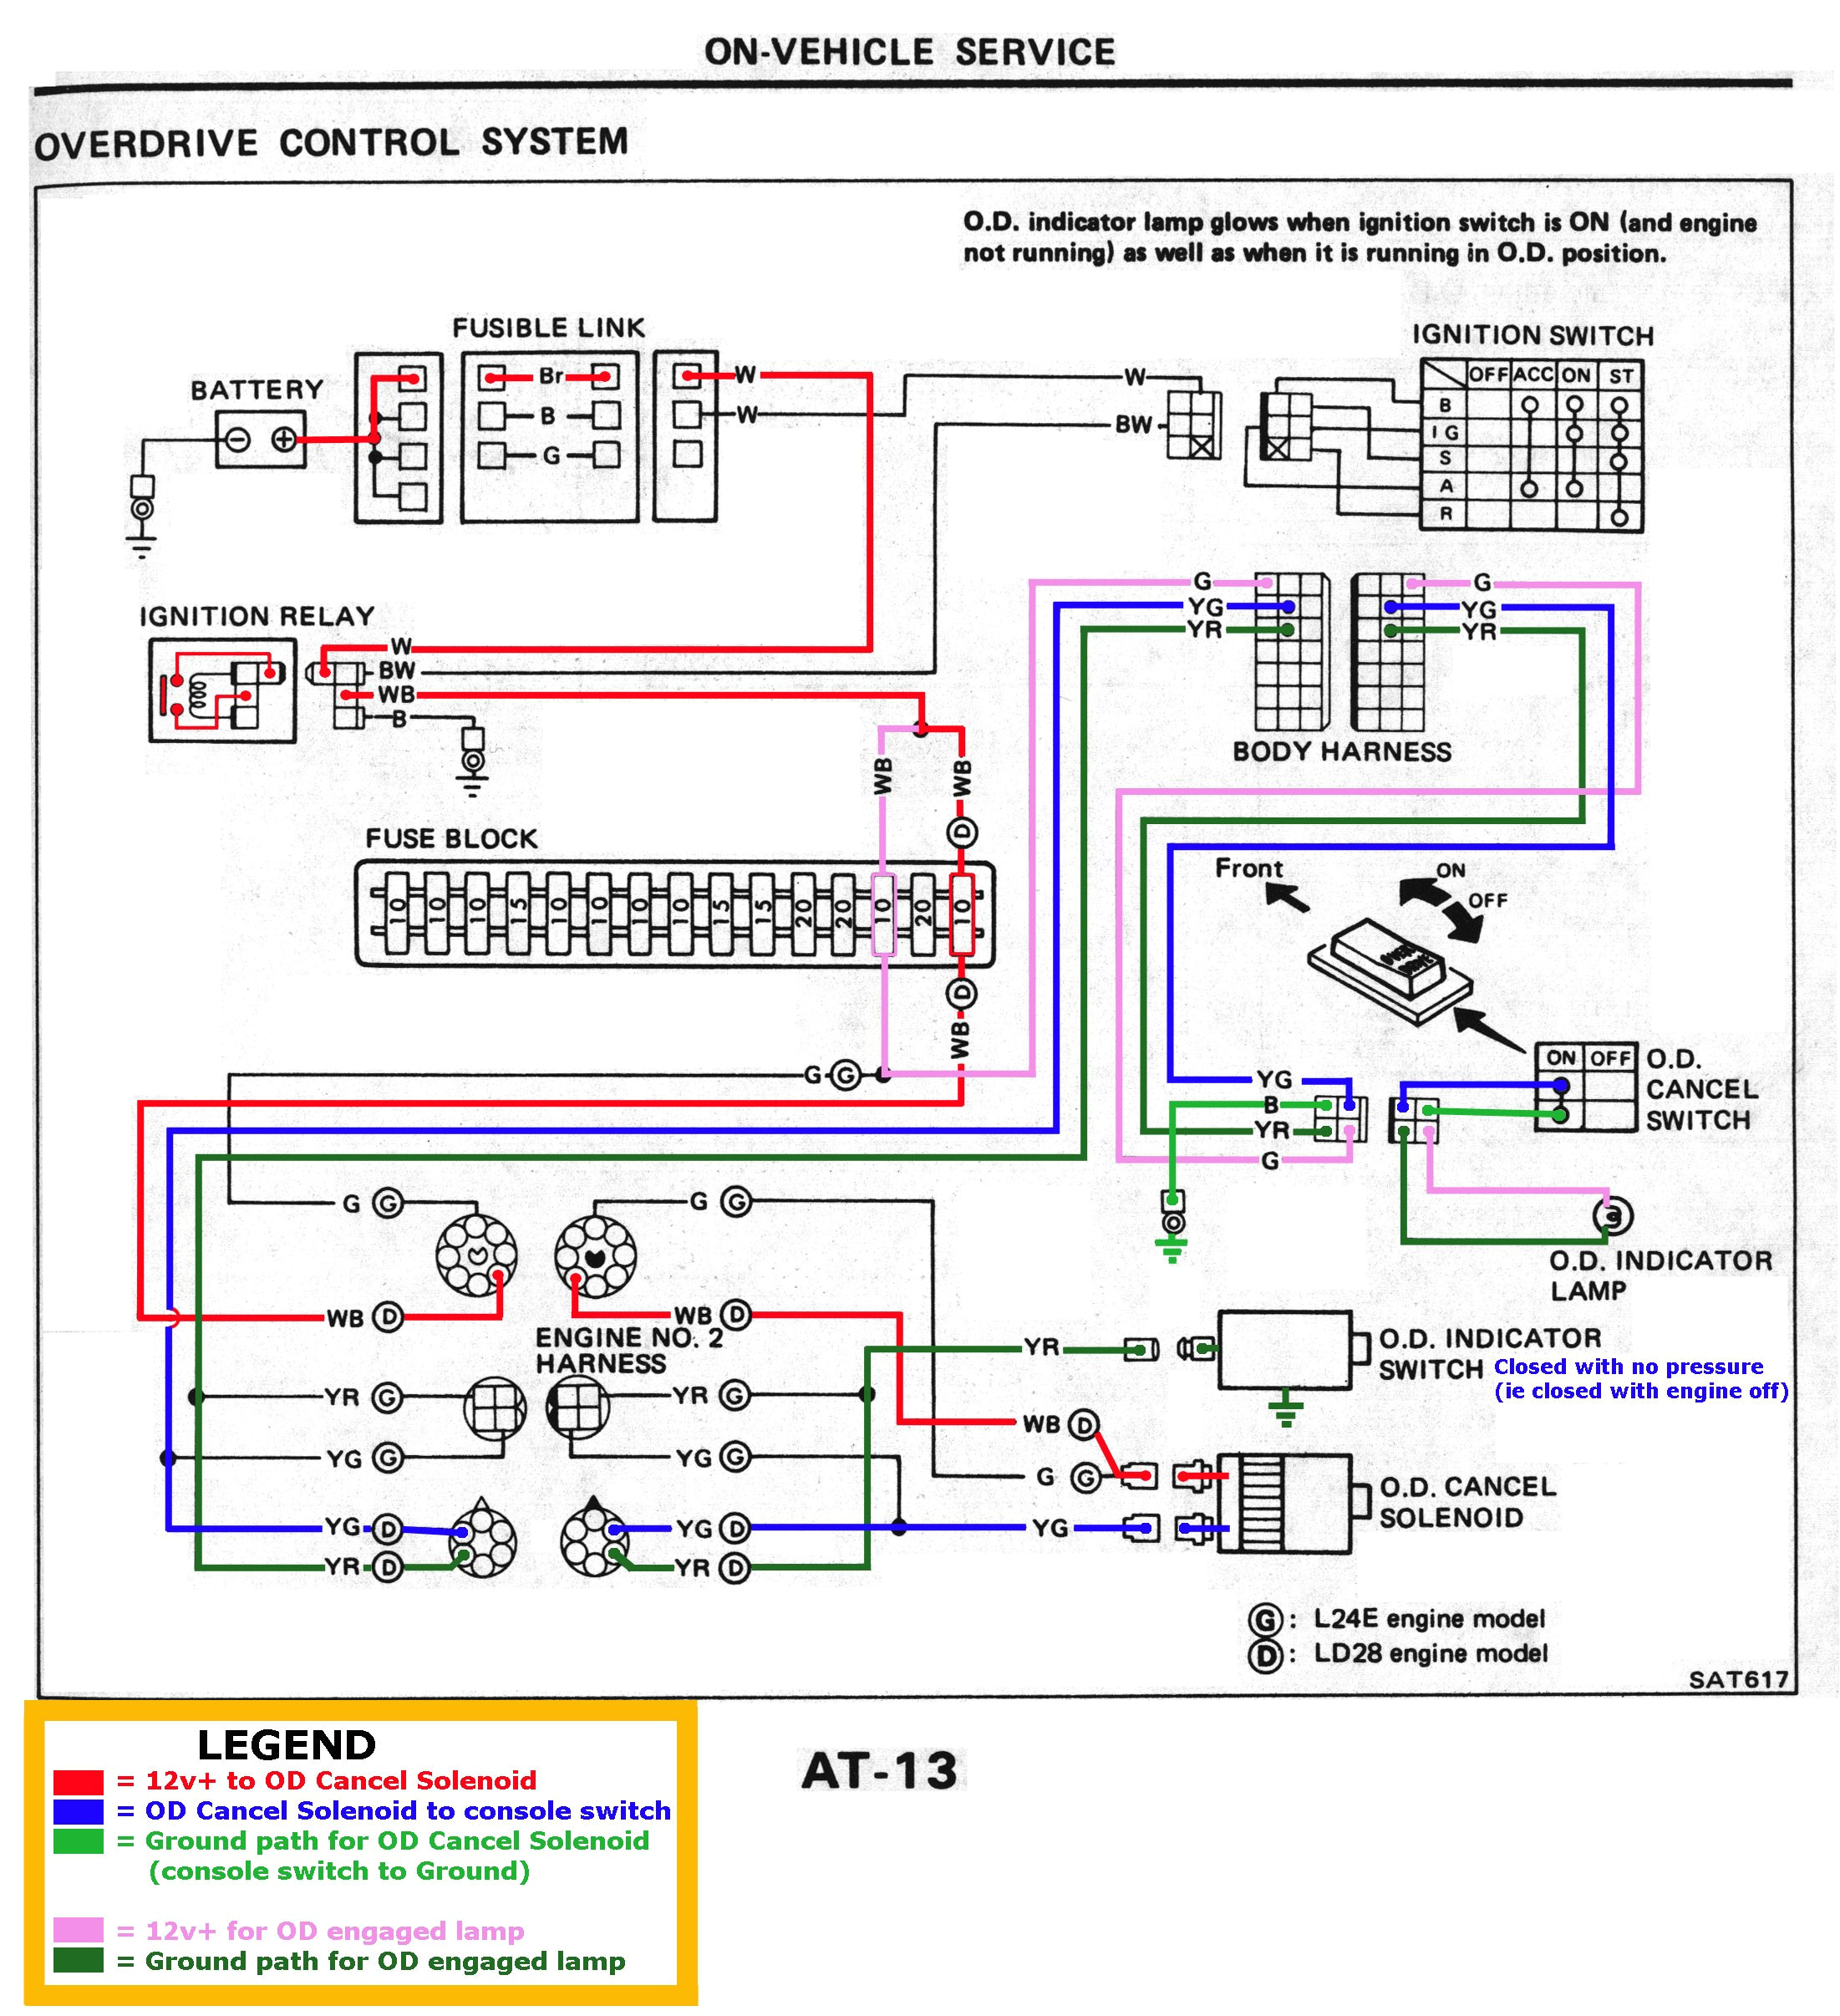 datsun radio wiring wiring diagram expert datsun radio wiring datsun radio wiring